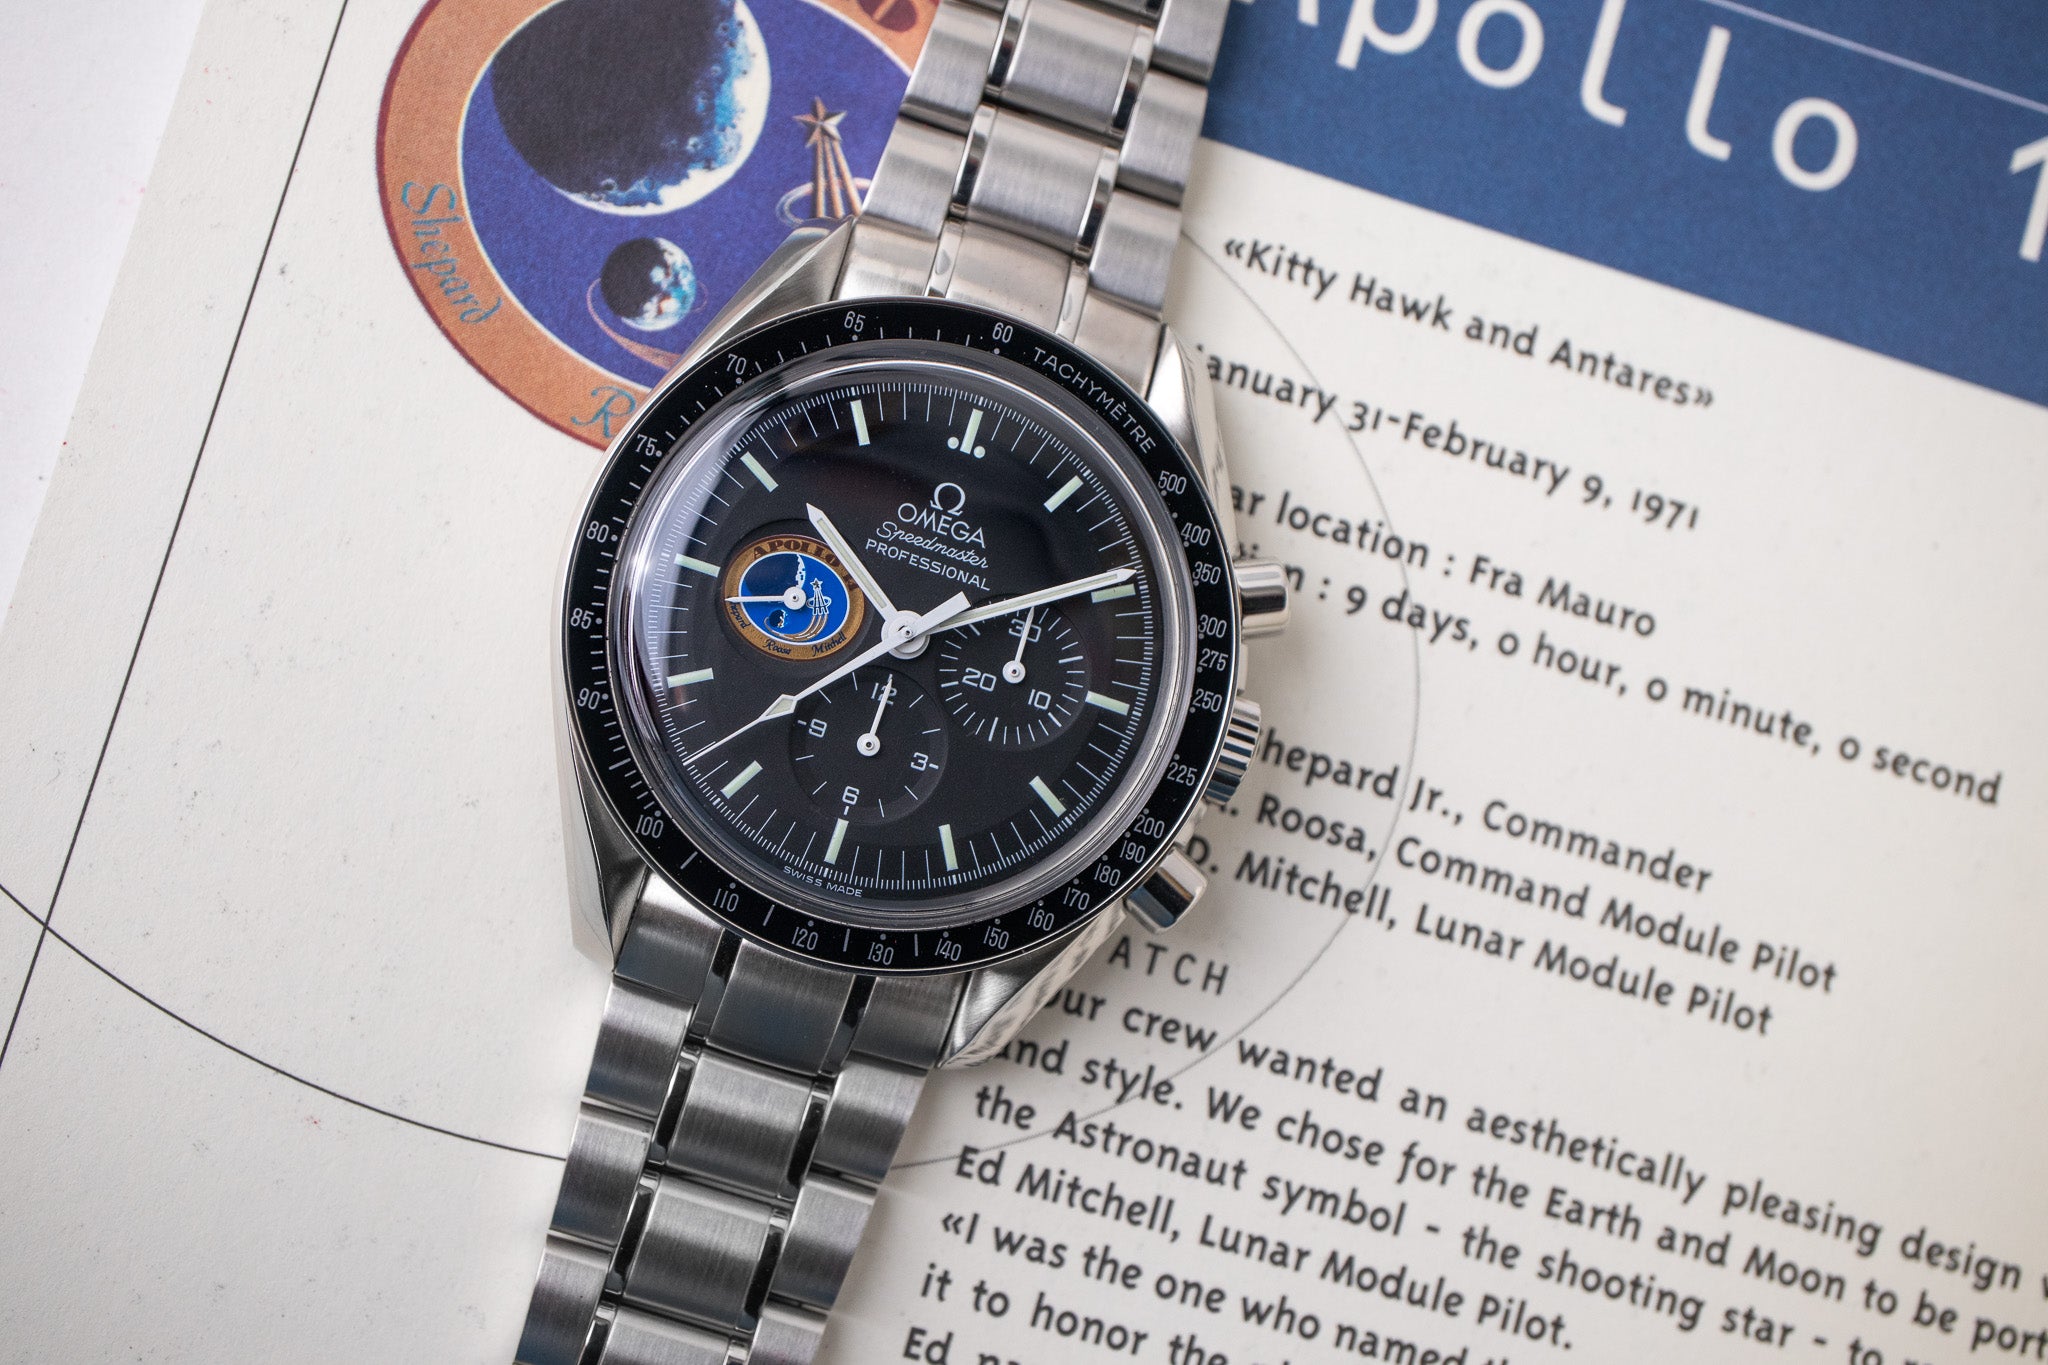 Omega Speedmaster Apollo 14 Missions 3597.17